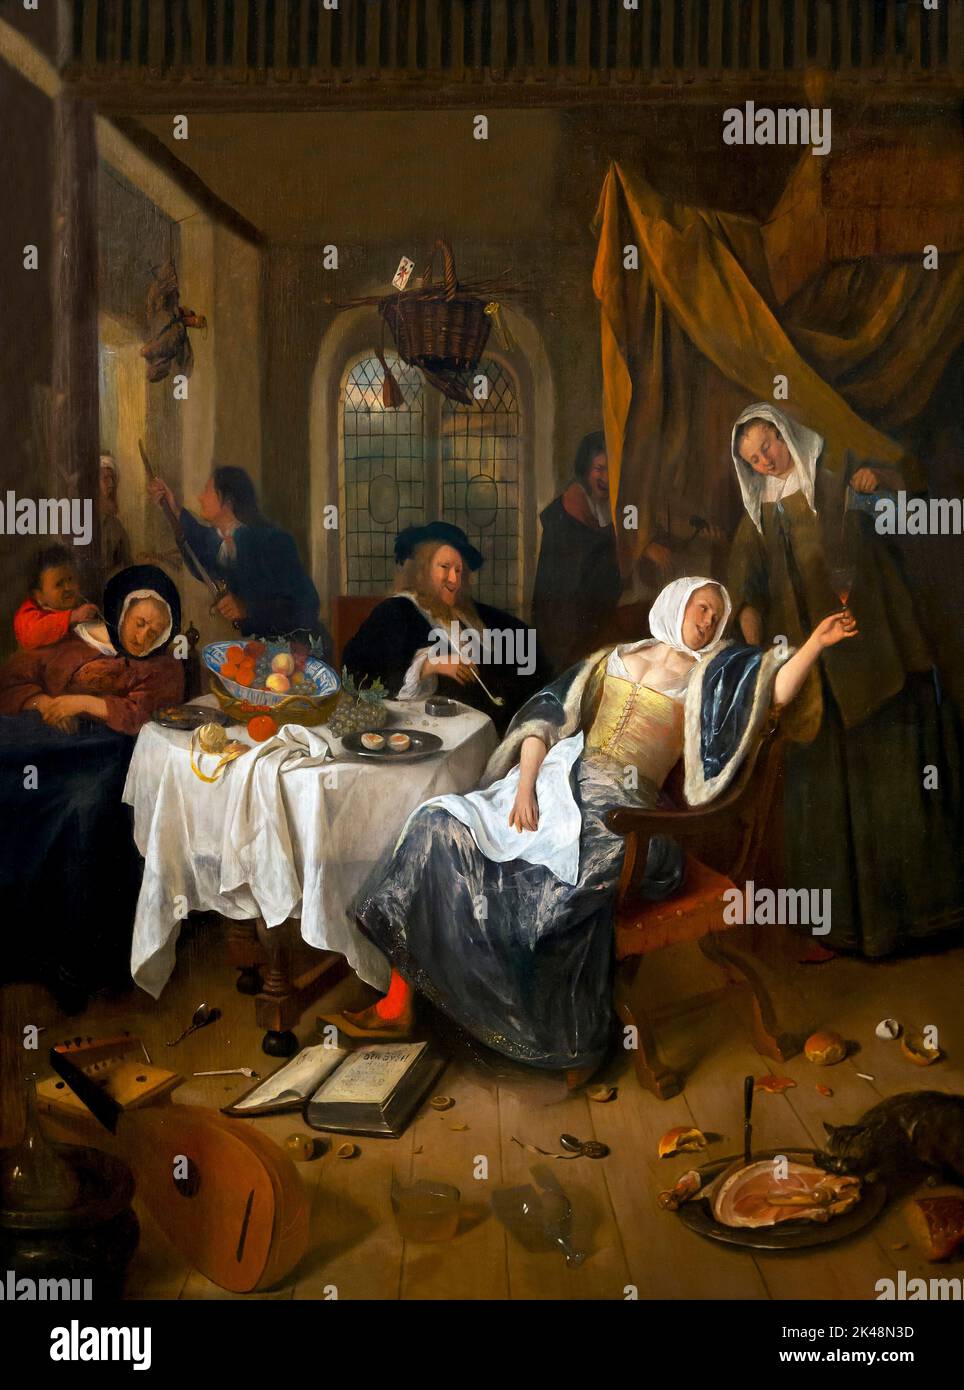 The Dissolute Household, Jan Steen, 1660-1670, Gemaldegalerie, Berlin, Allemagne, Europe Banque D'Images